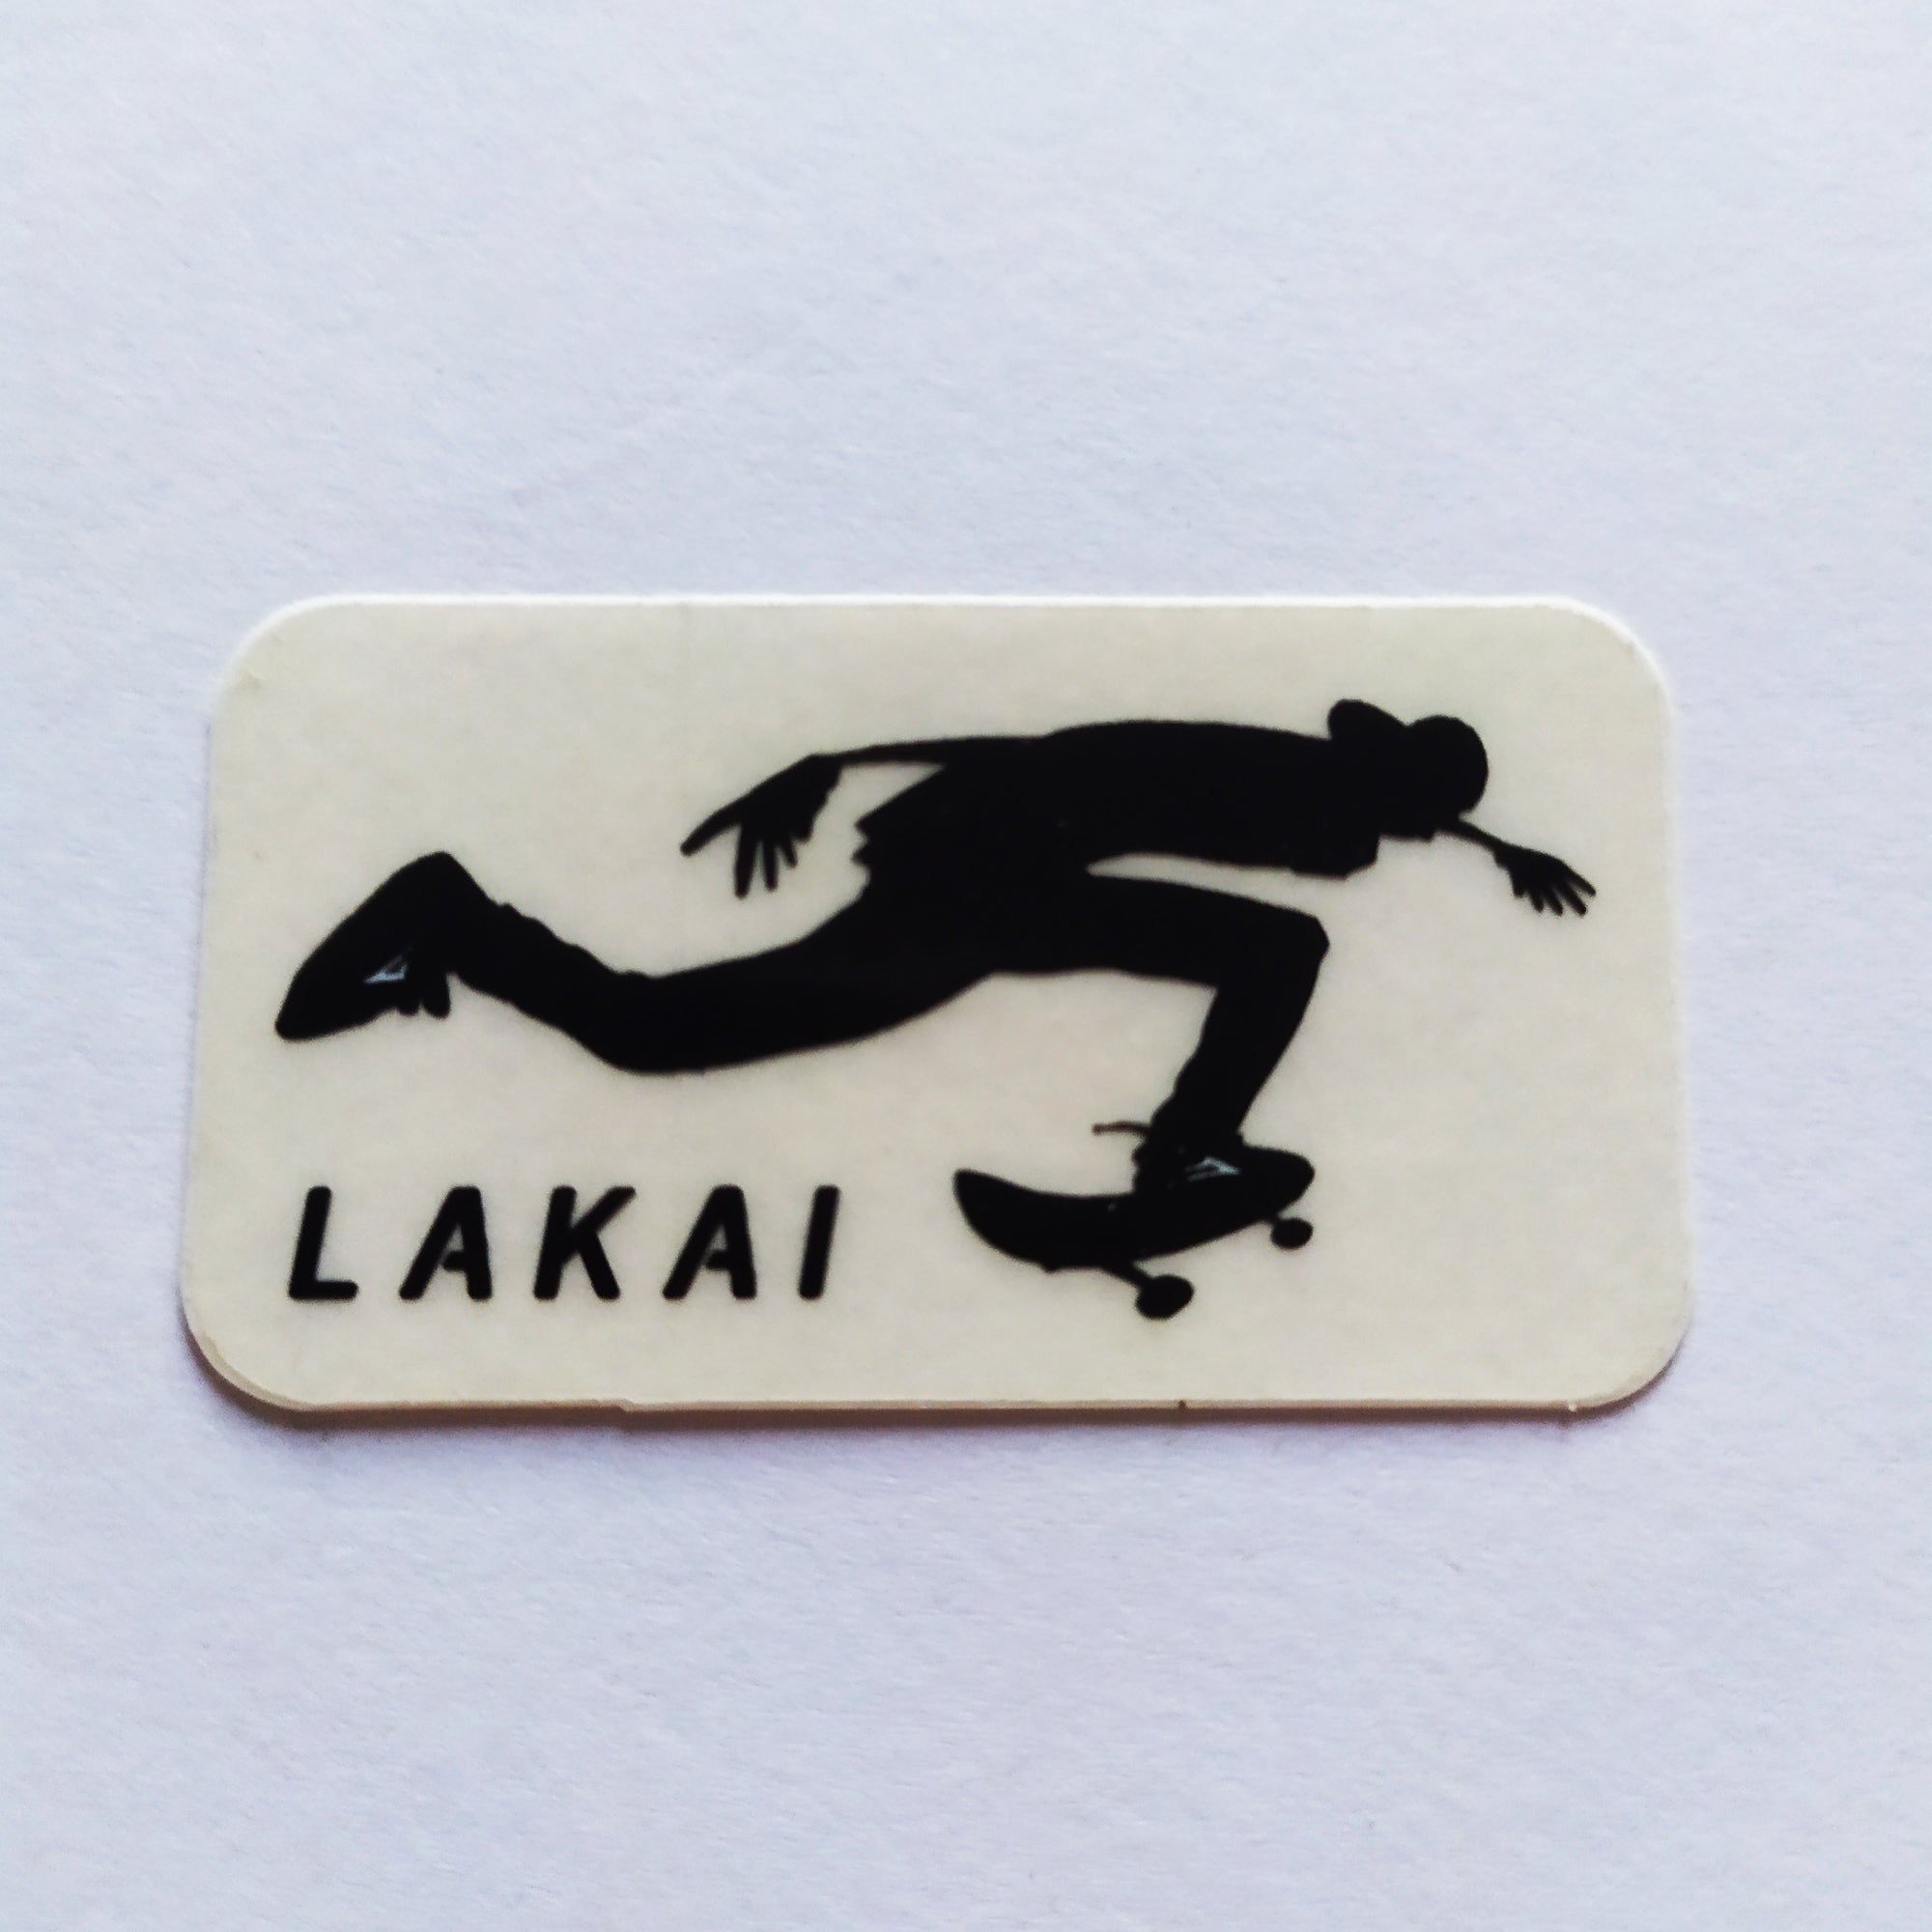 Lakai Skate Shoes Skateboard Sticker - "Push" - SkateboardStickers.com